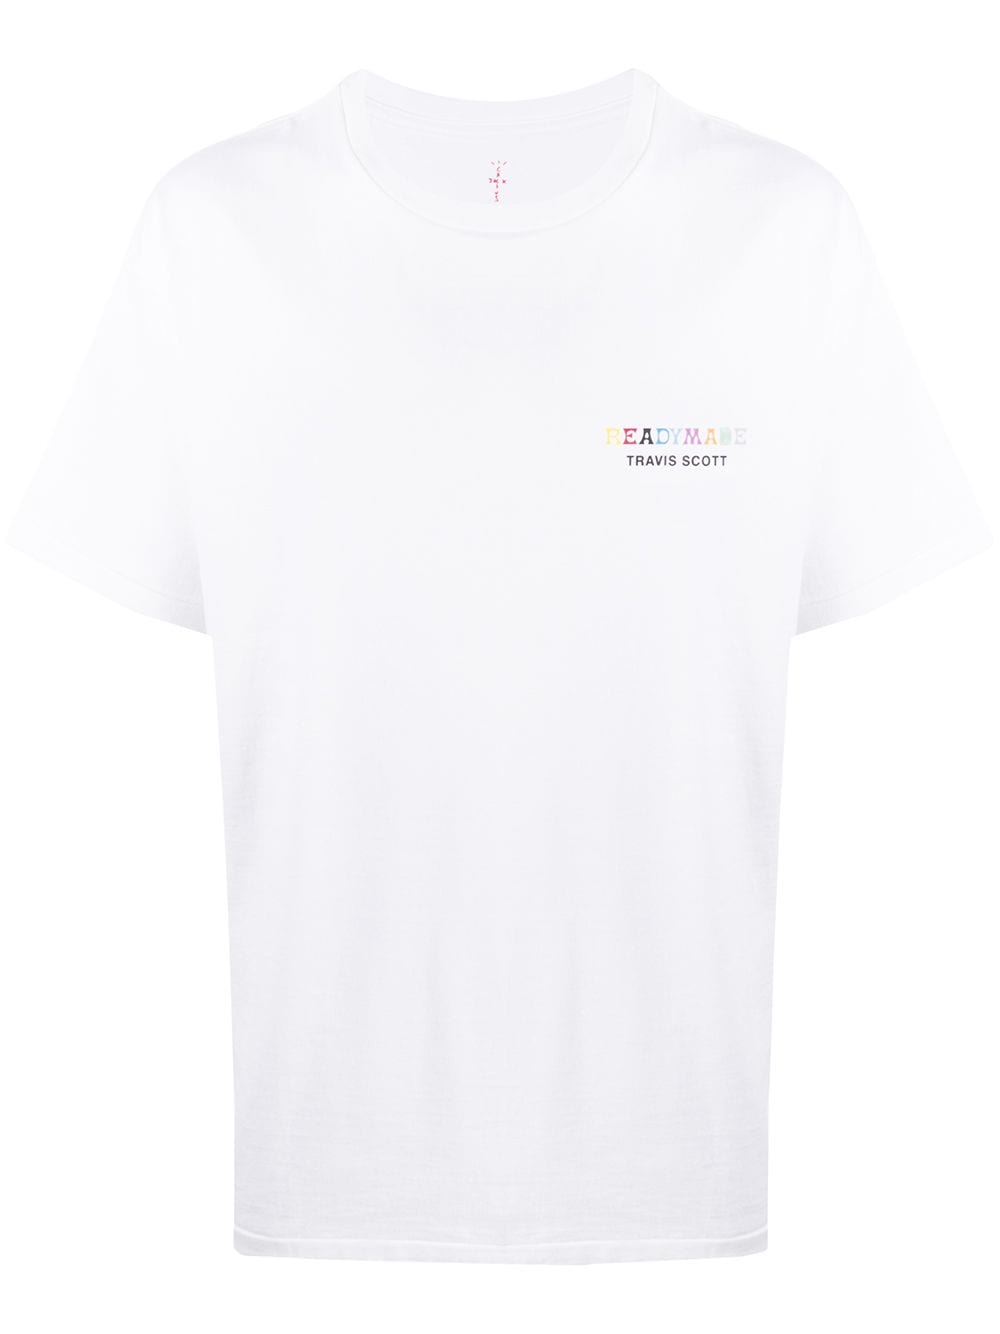 Readymade crew neck printed logo T-shirt - White von Readymade